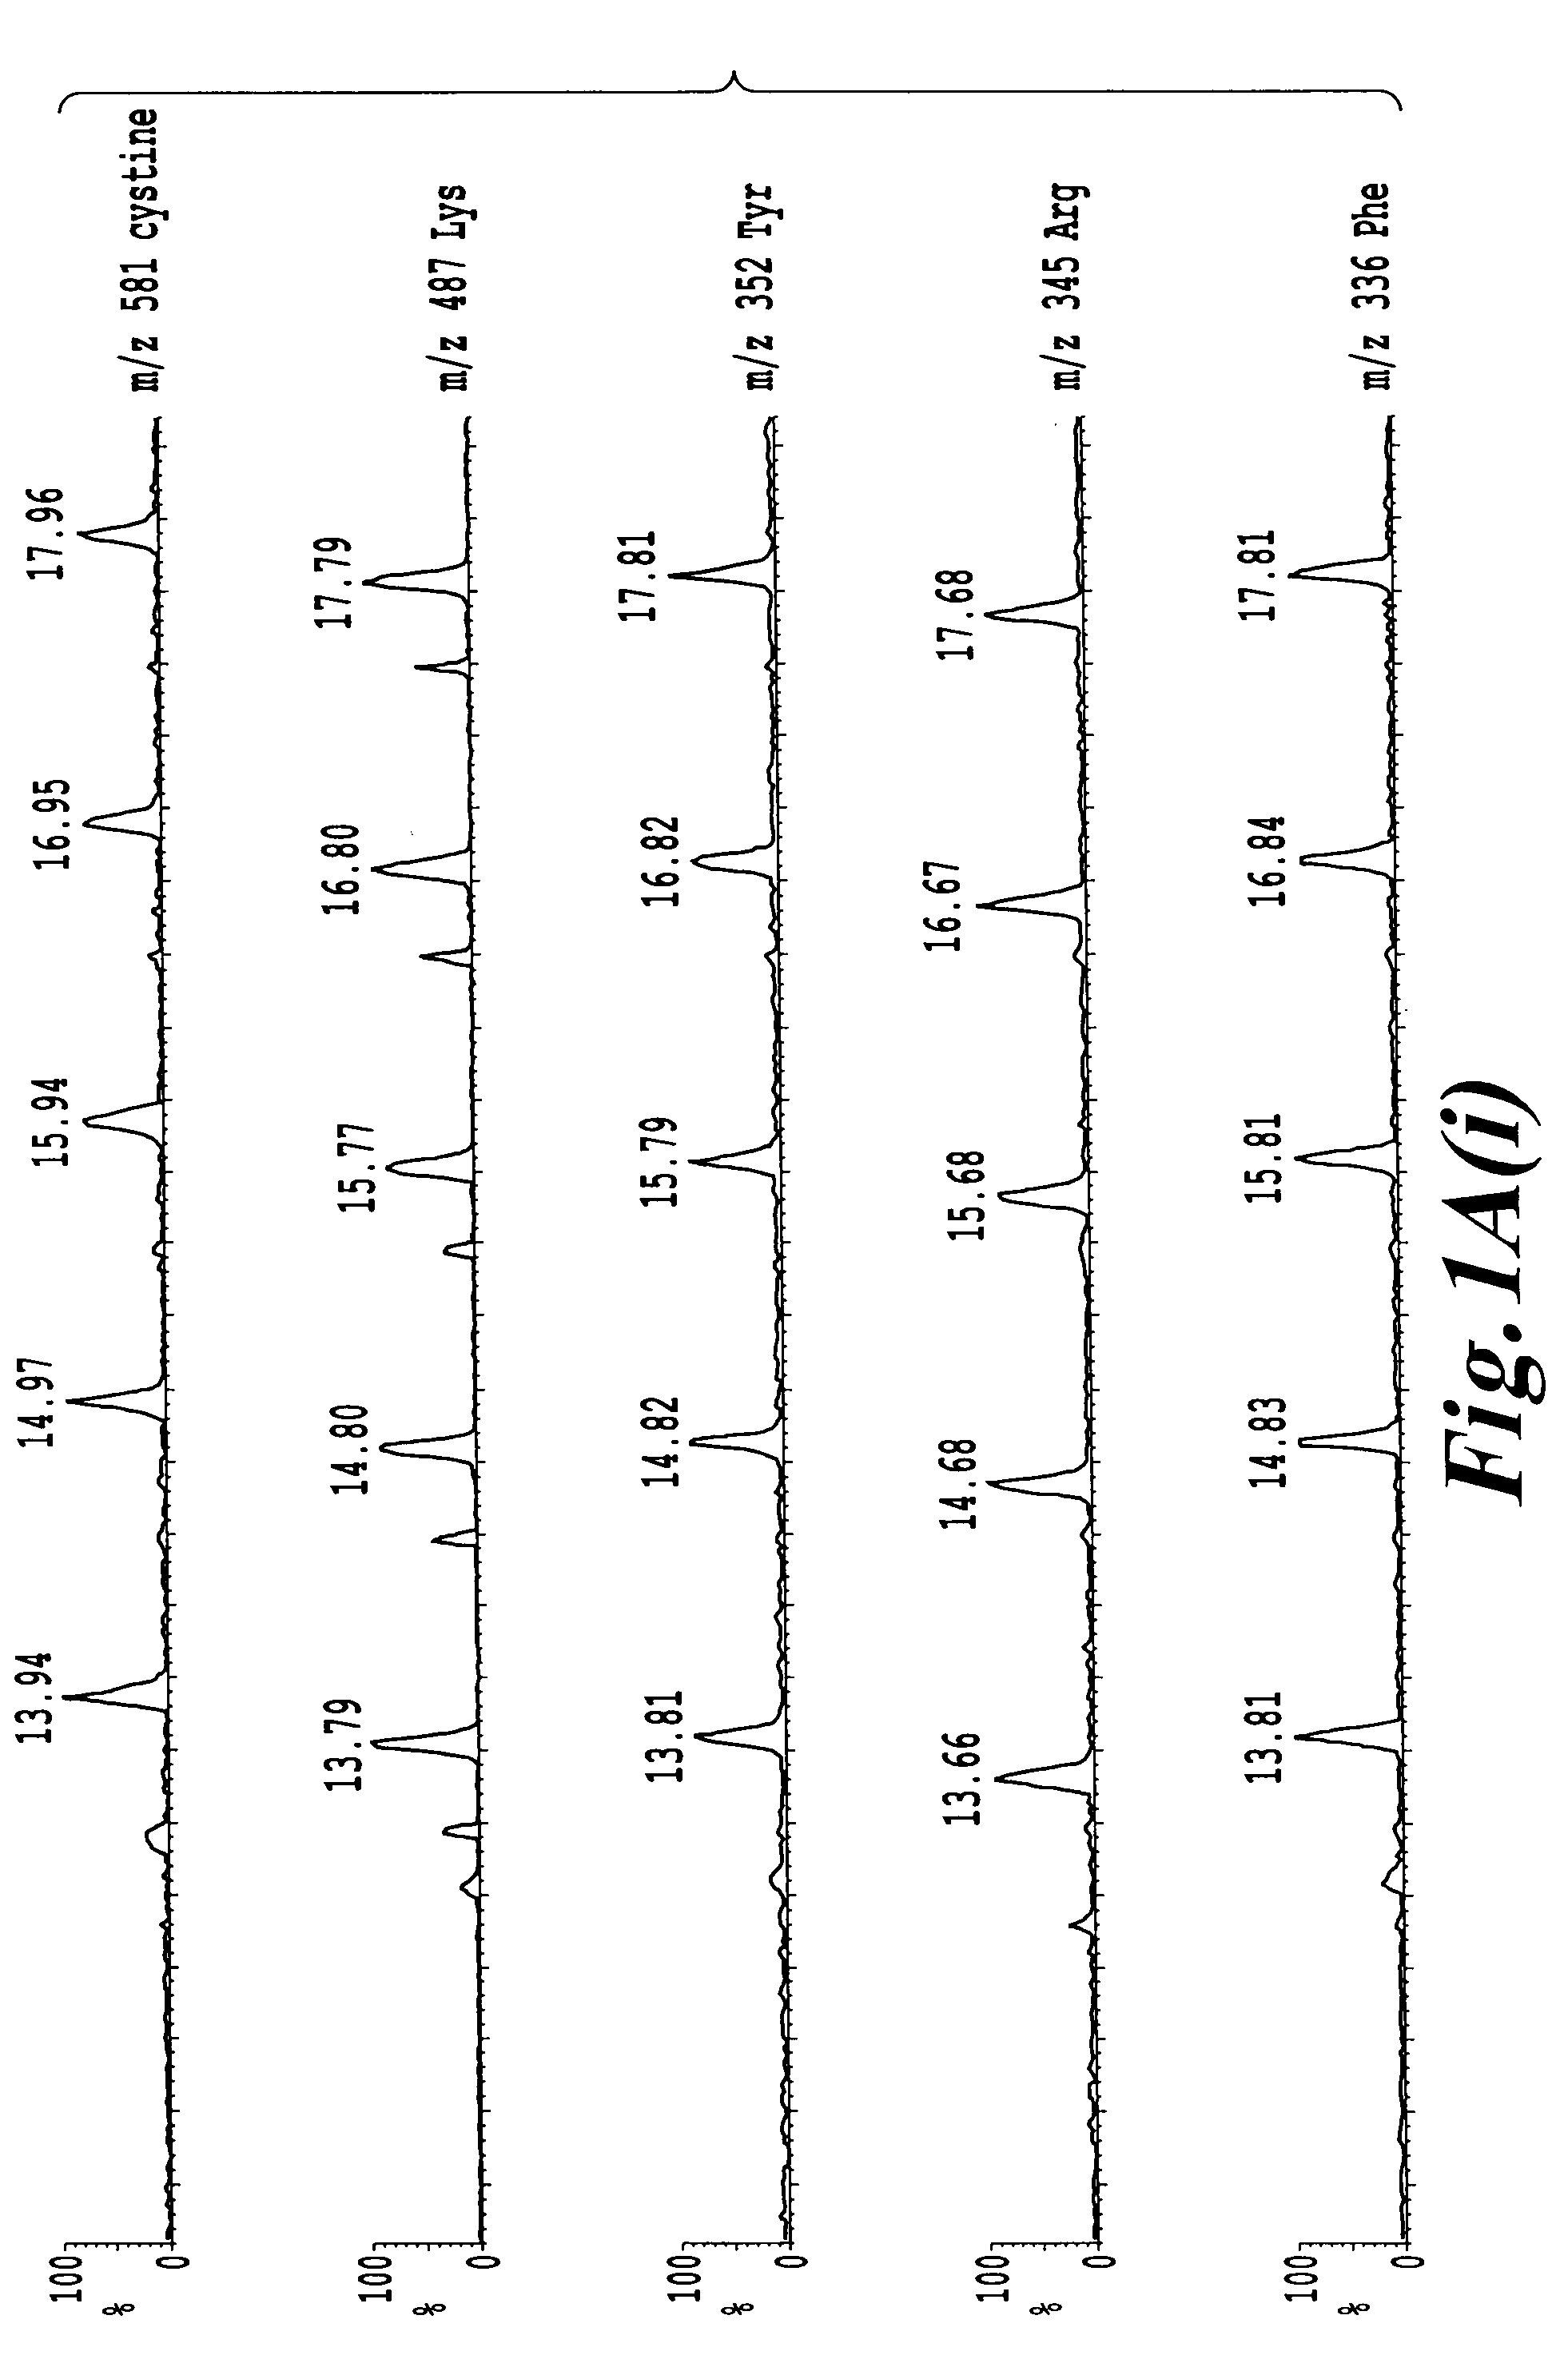 Analysis method of amino acid using mass spectrometer